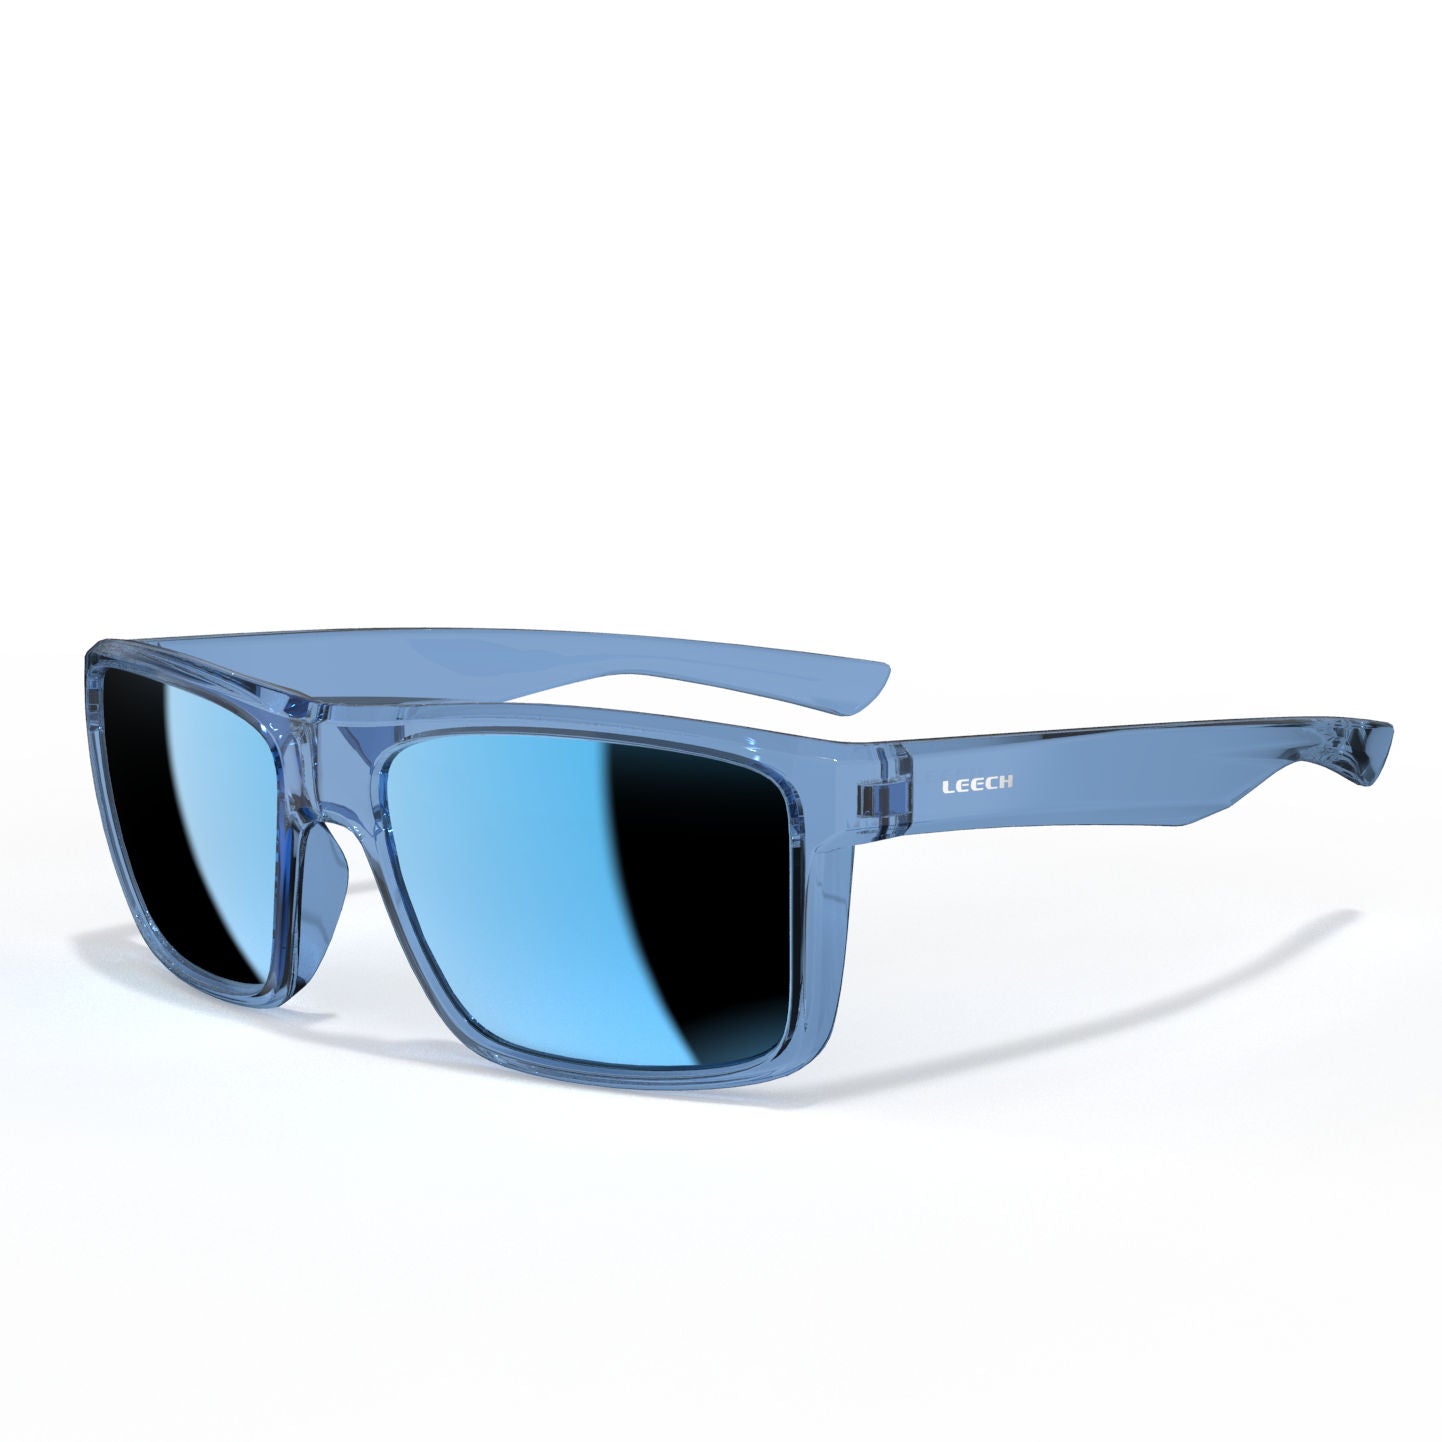 Leech X7 Polarized Fishing Sunglasses | X7 ONYX